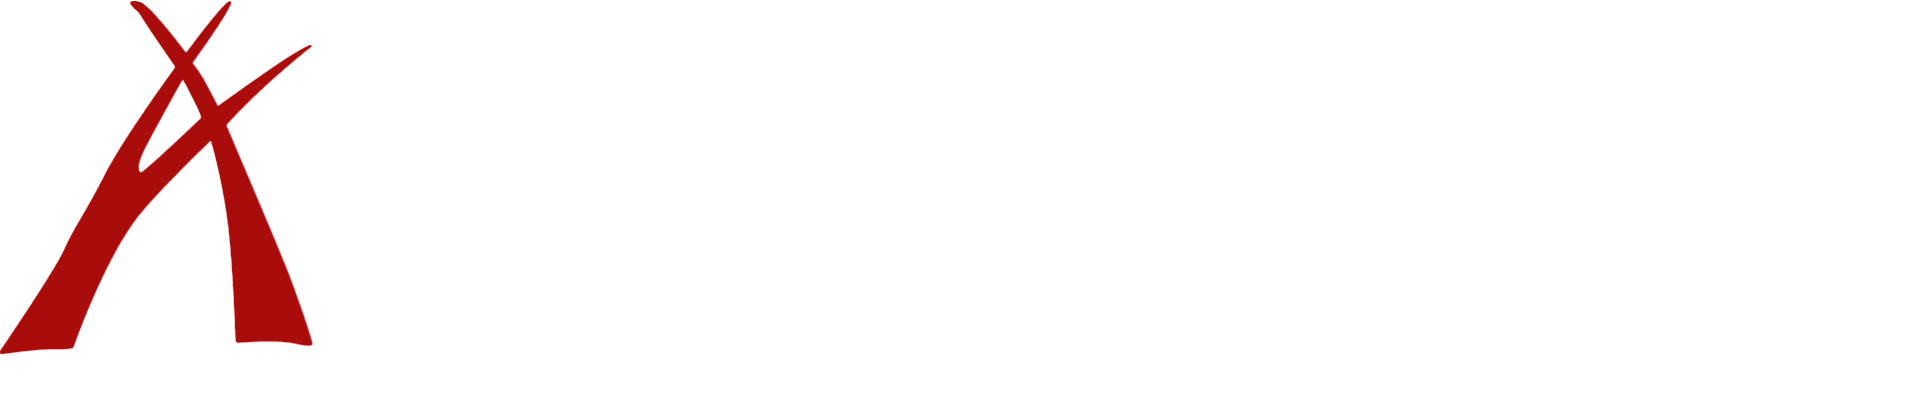 Arctic Thai & Grill i Boden logotyp